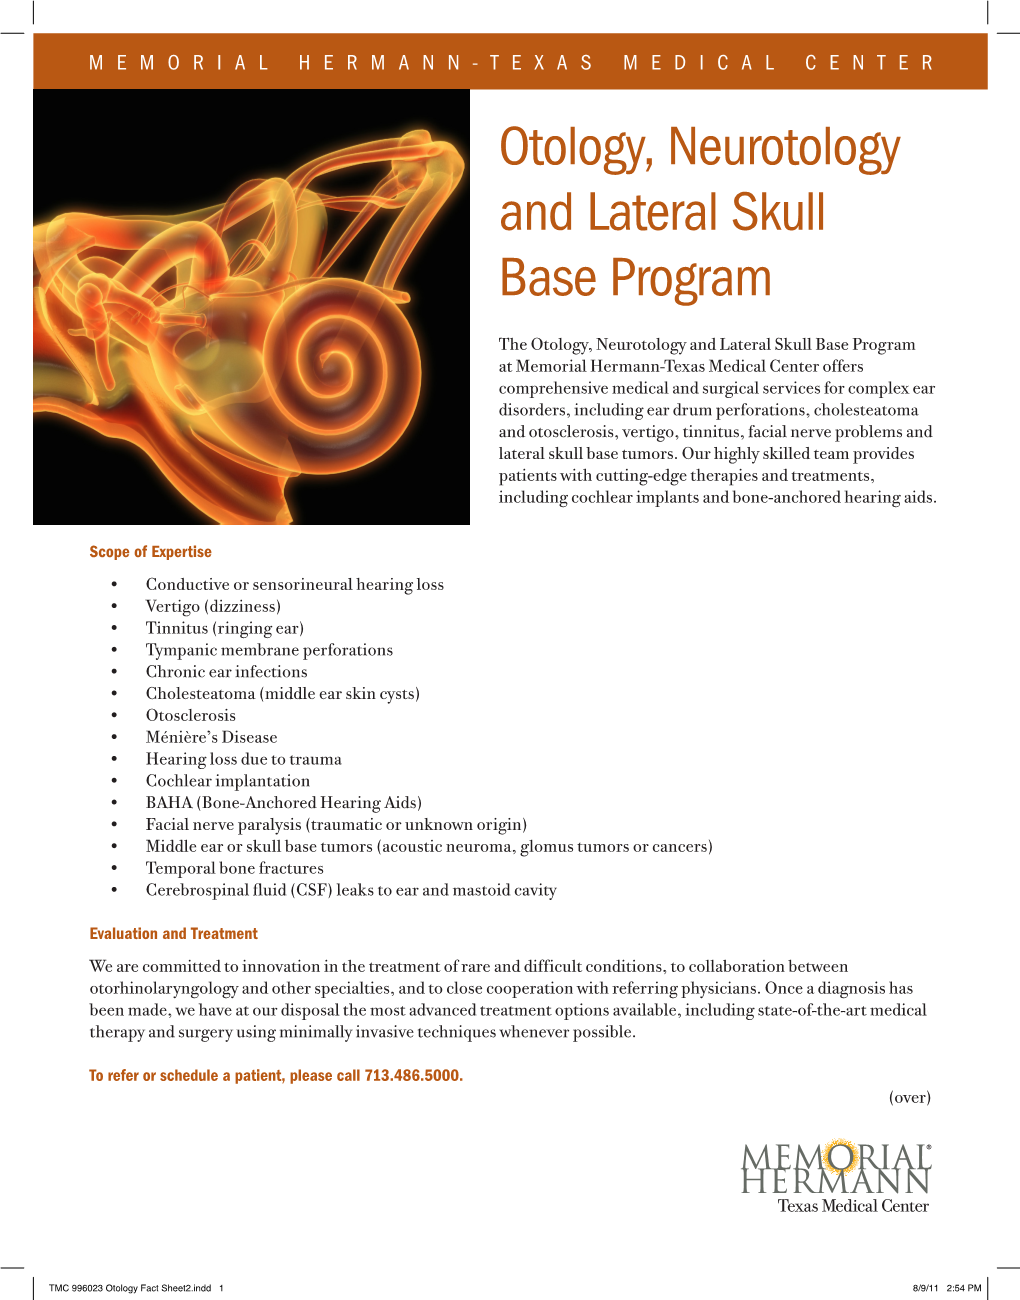 Otology, Neurotology and Lateral Skull Base Program